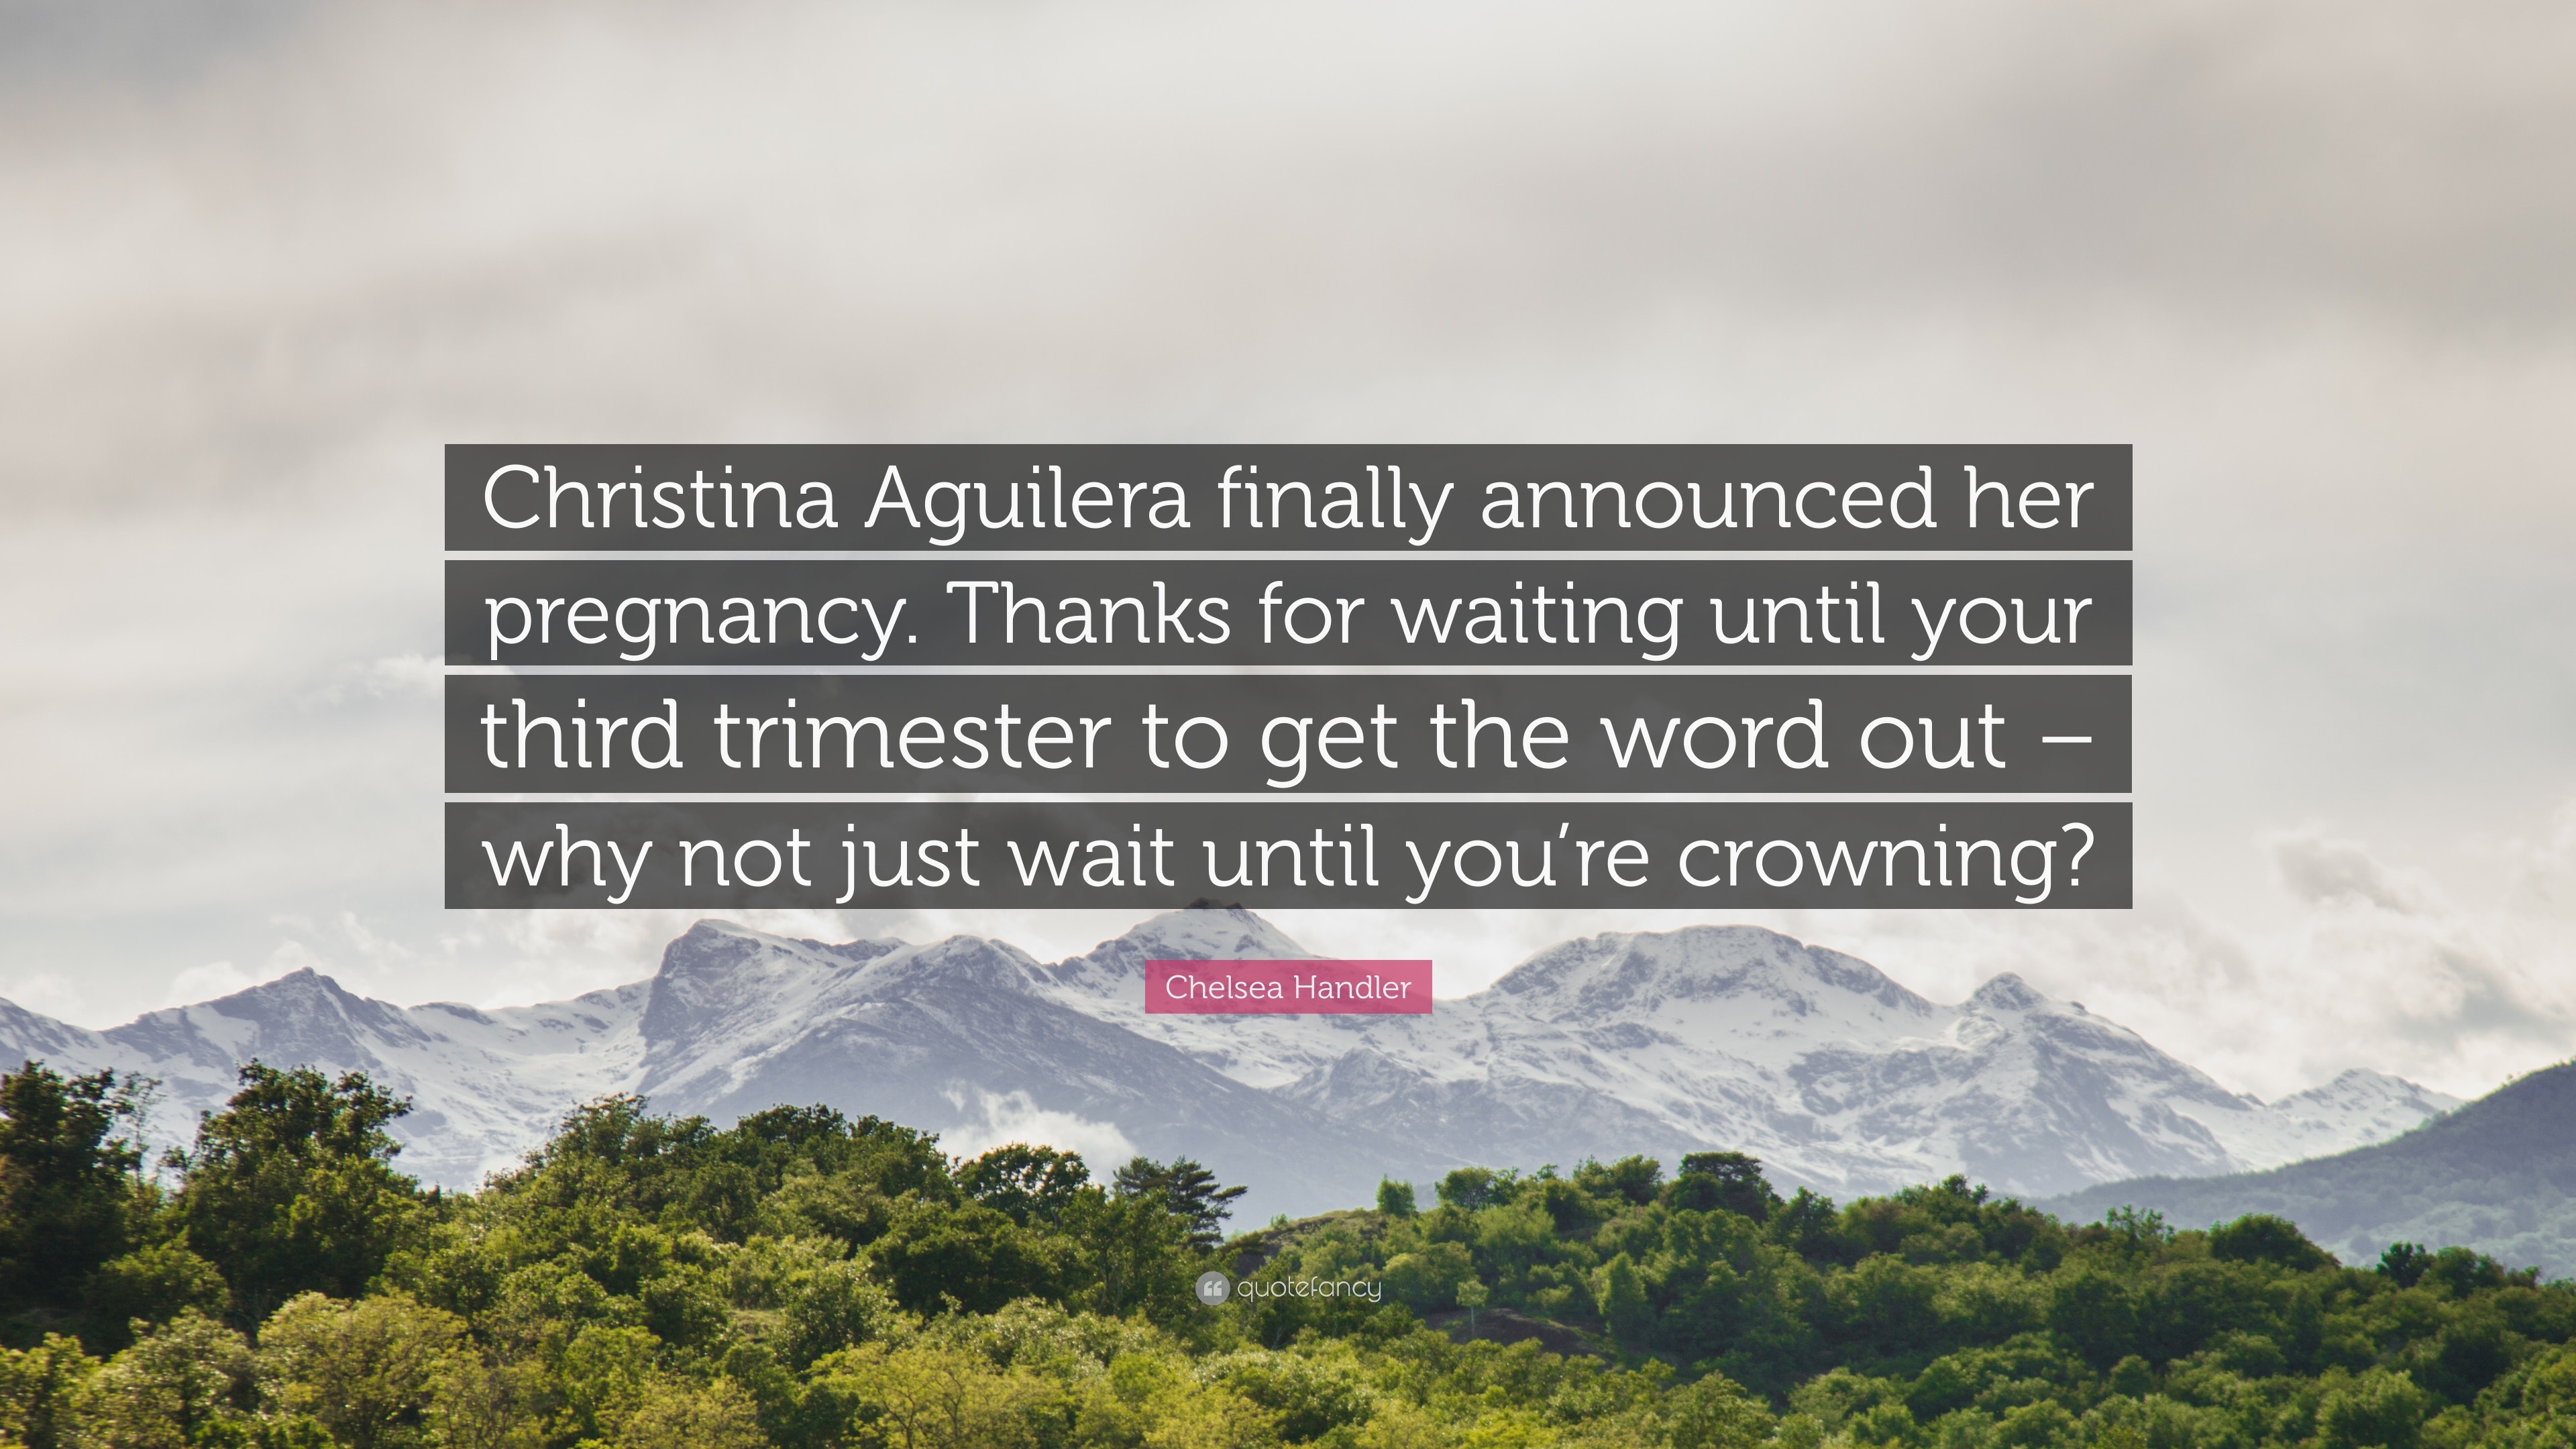 https://quotefancy.com/media/wallpaper/3840x2160/297538-Chelsea-Handler-Quote-Christina-Aguilera-finally-announced-her.jpg